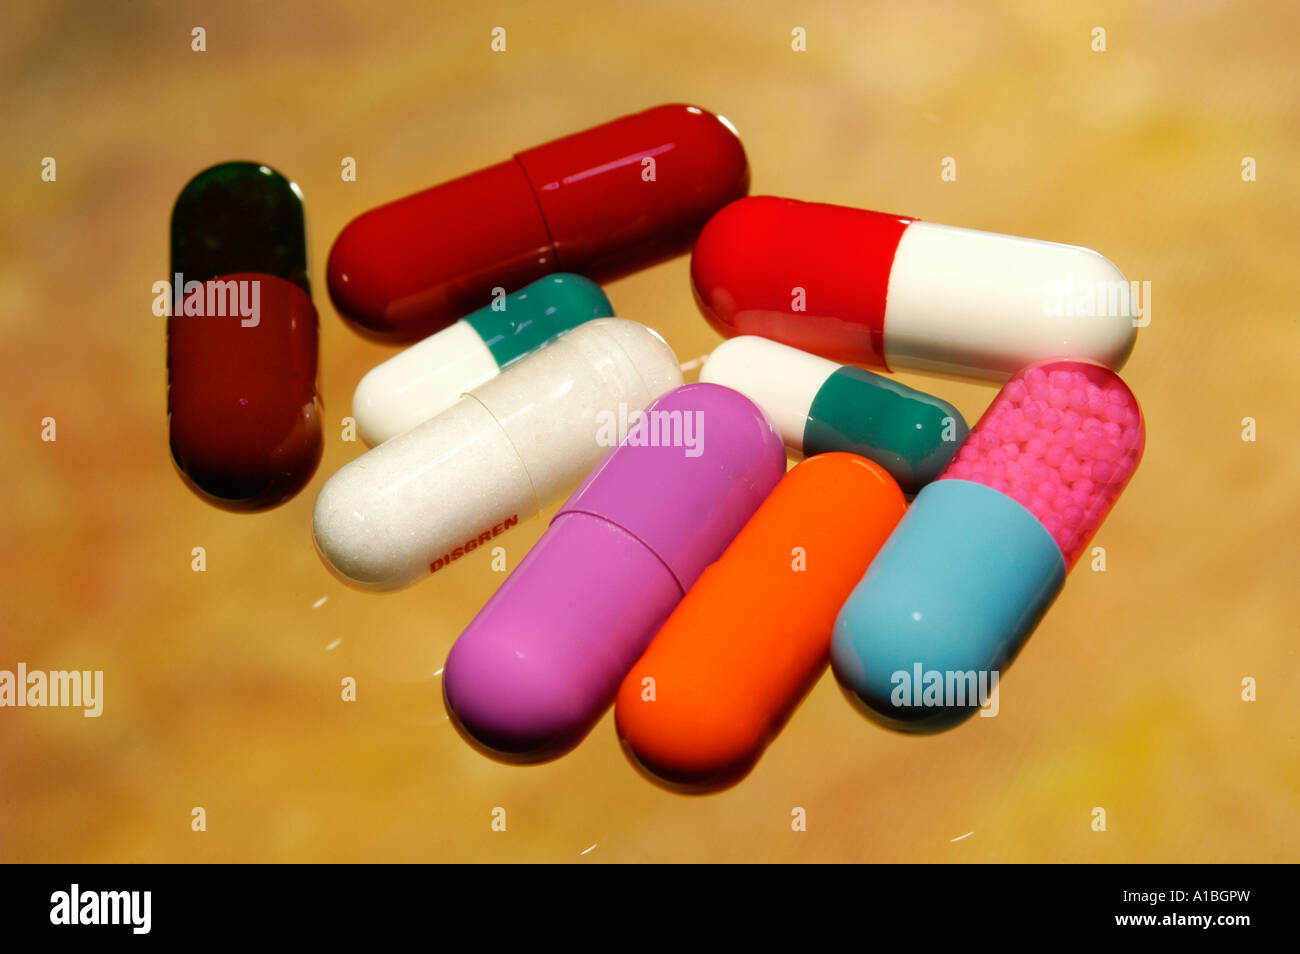 still life on health products pills Stock Photo